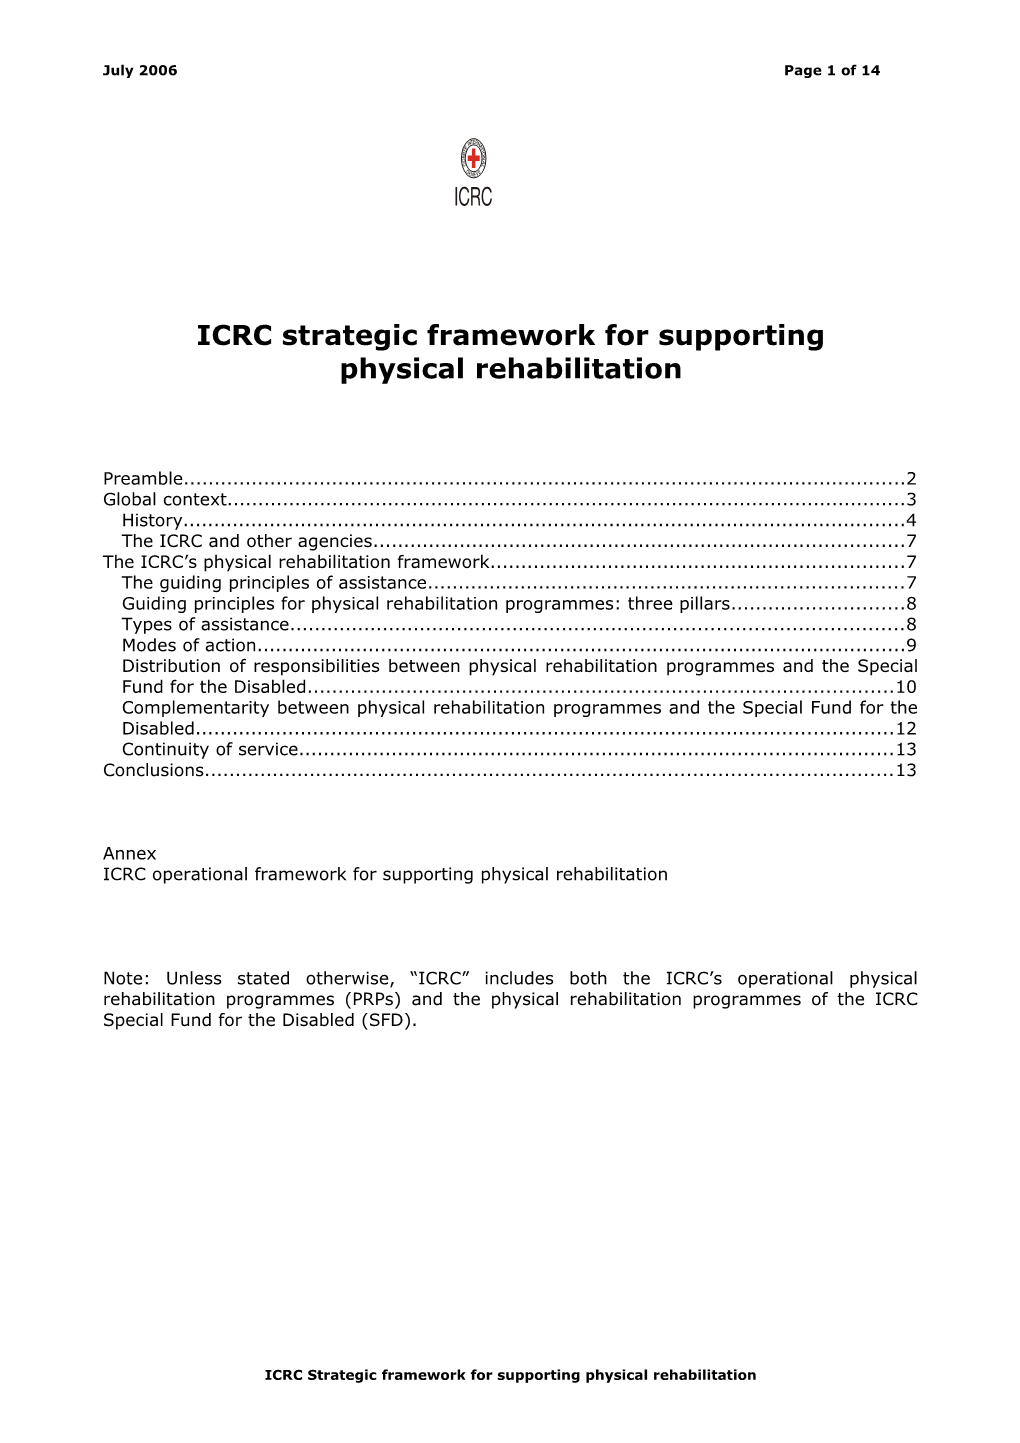 ICRC Strategic Framework for Supporting Physical Rehabilitation